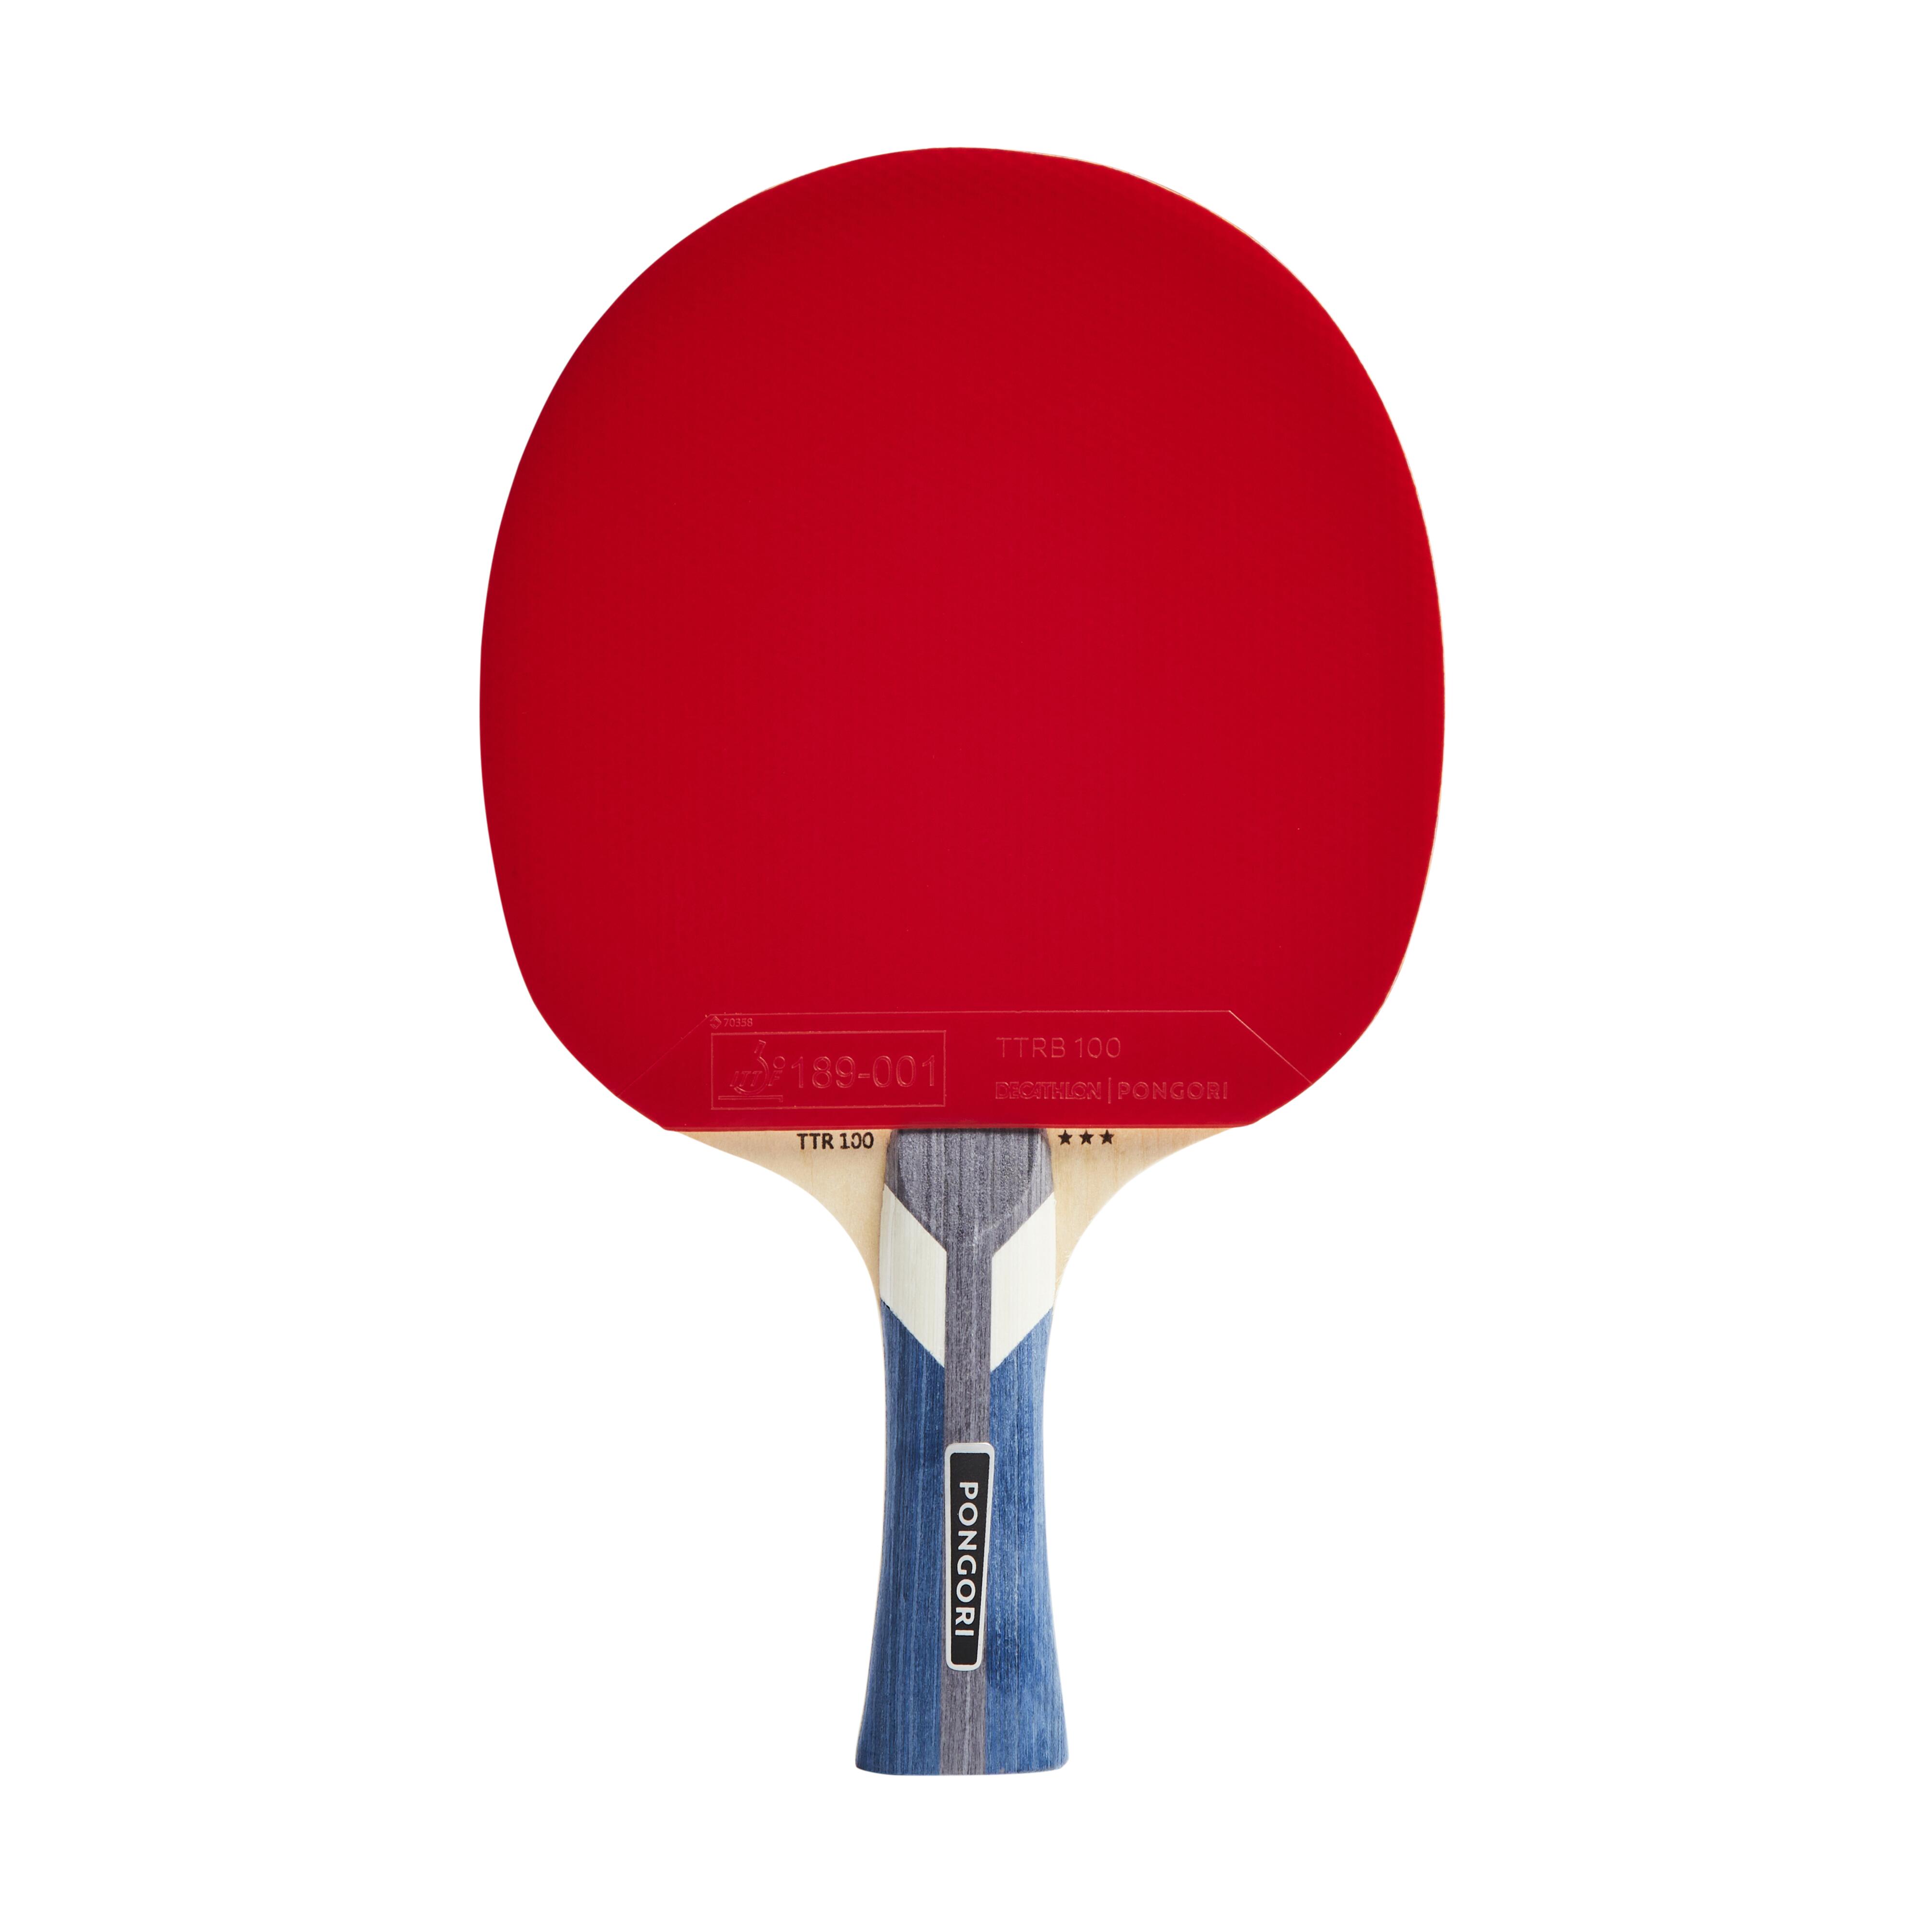 Raquette de tennis de table - TTR 100 3* Allround - PONGORI